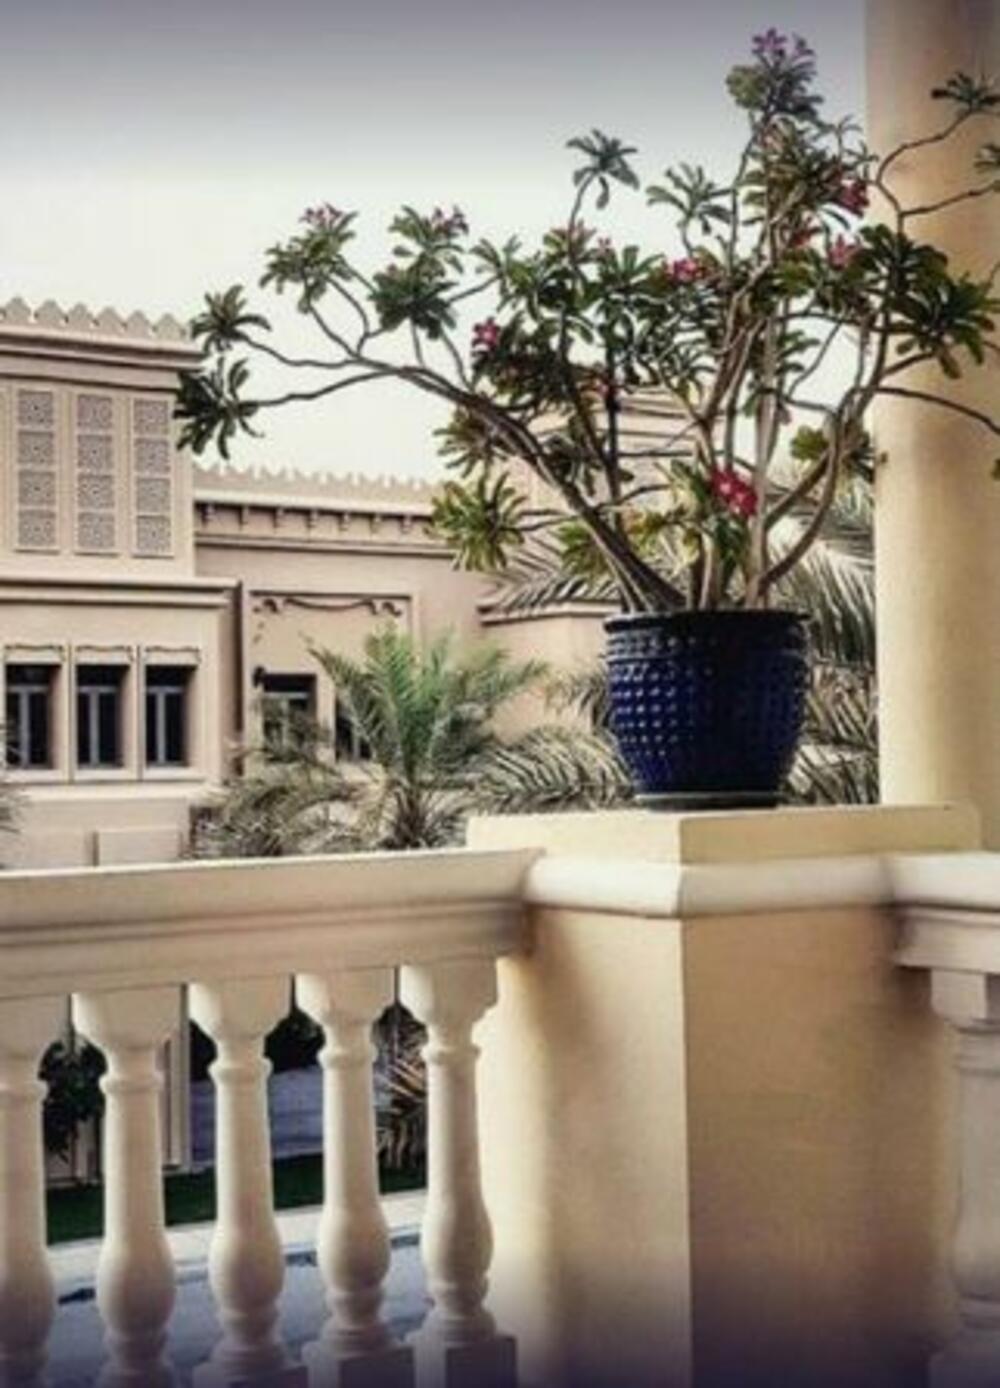 Kuća Jelene bin Drai u Dubaiju